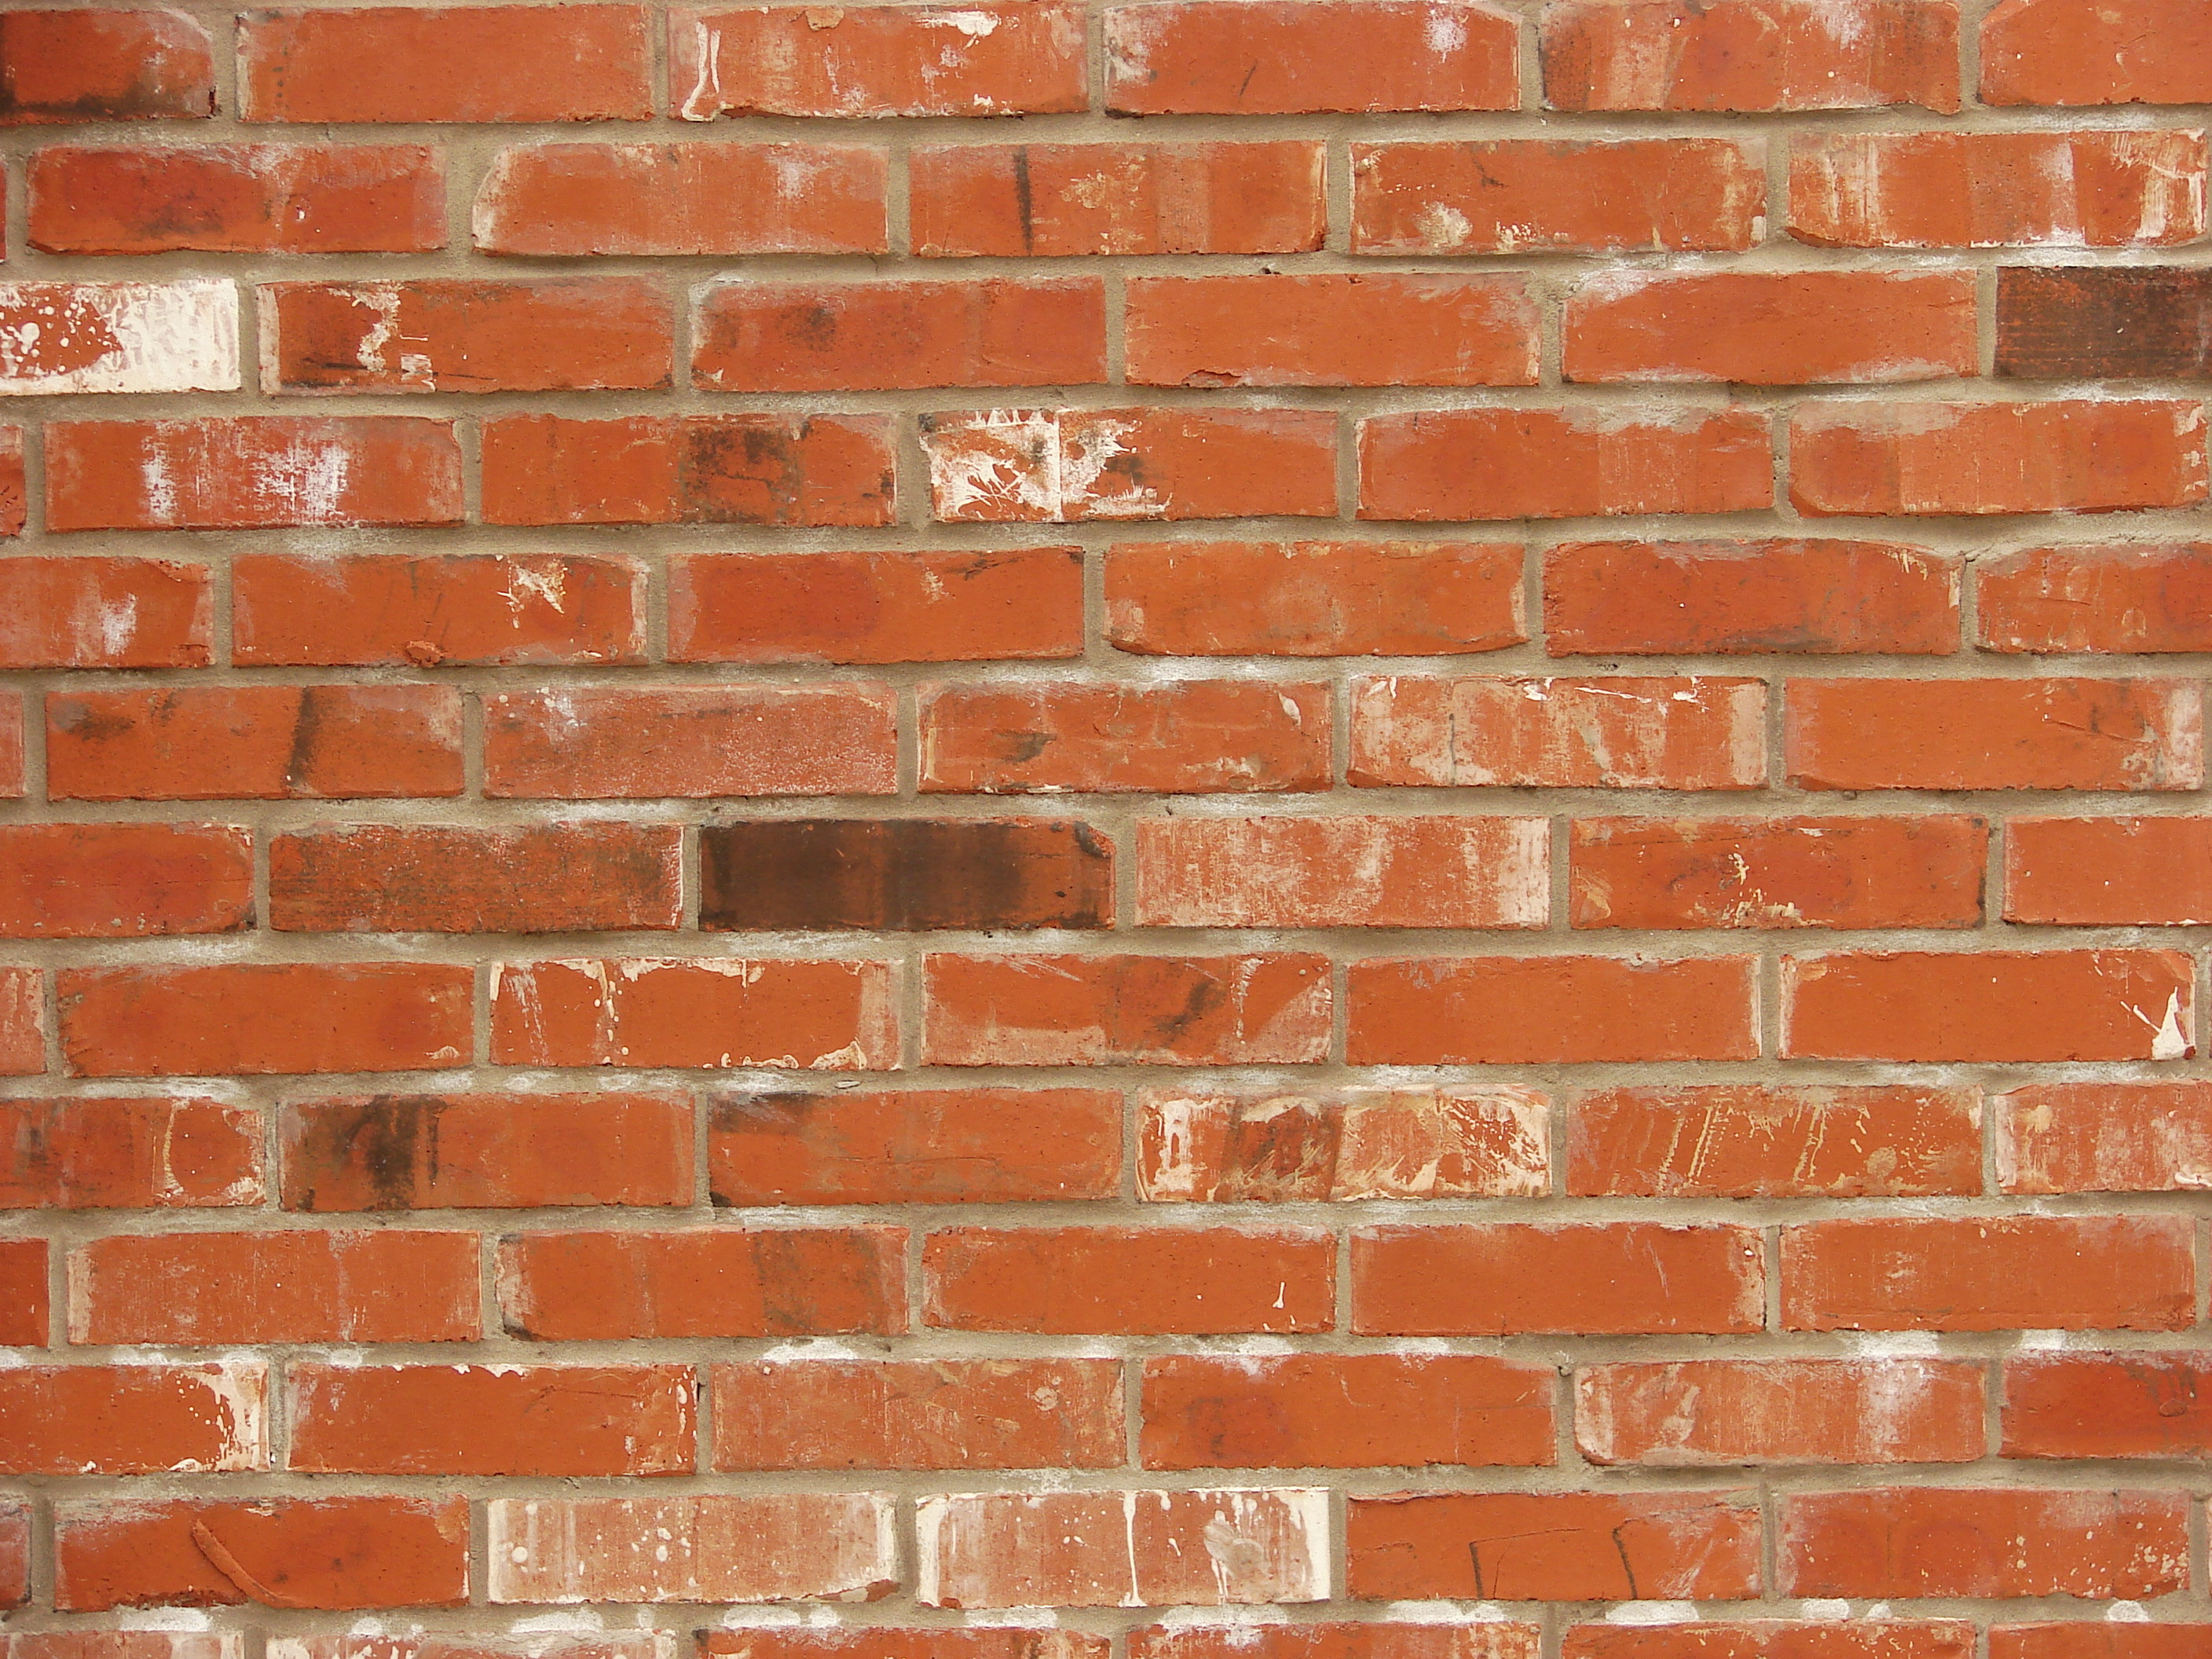 File:Bricks-4171.jpg - Wikimedia Commons